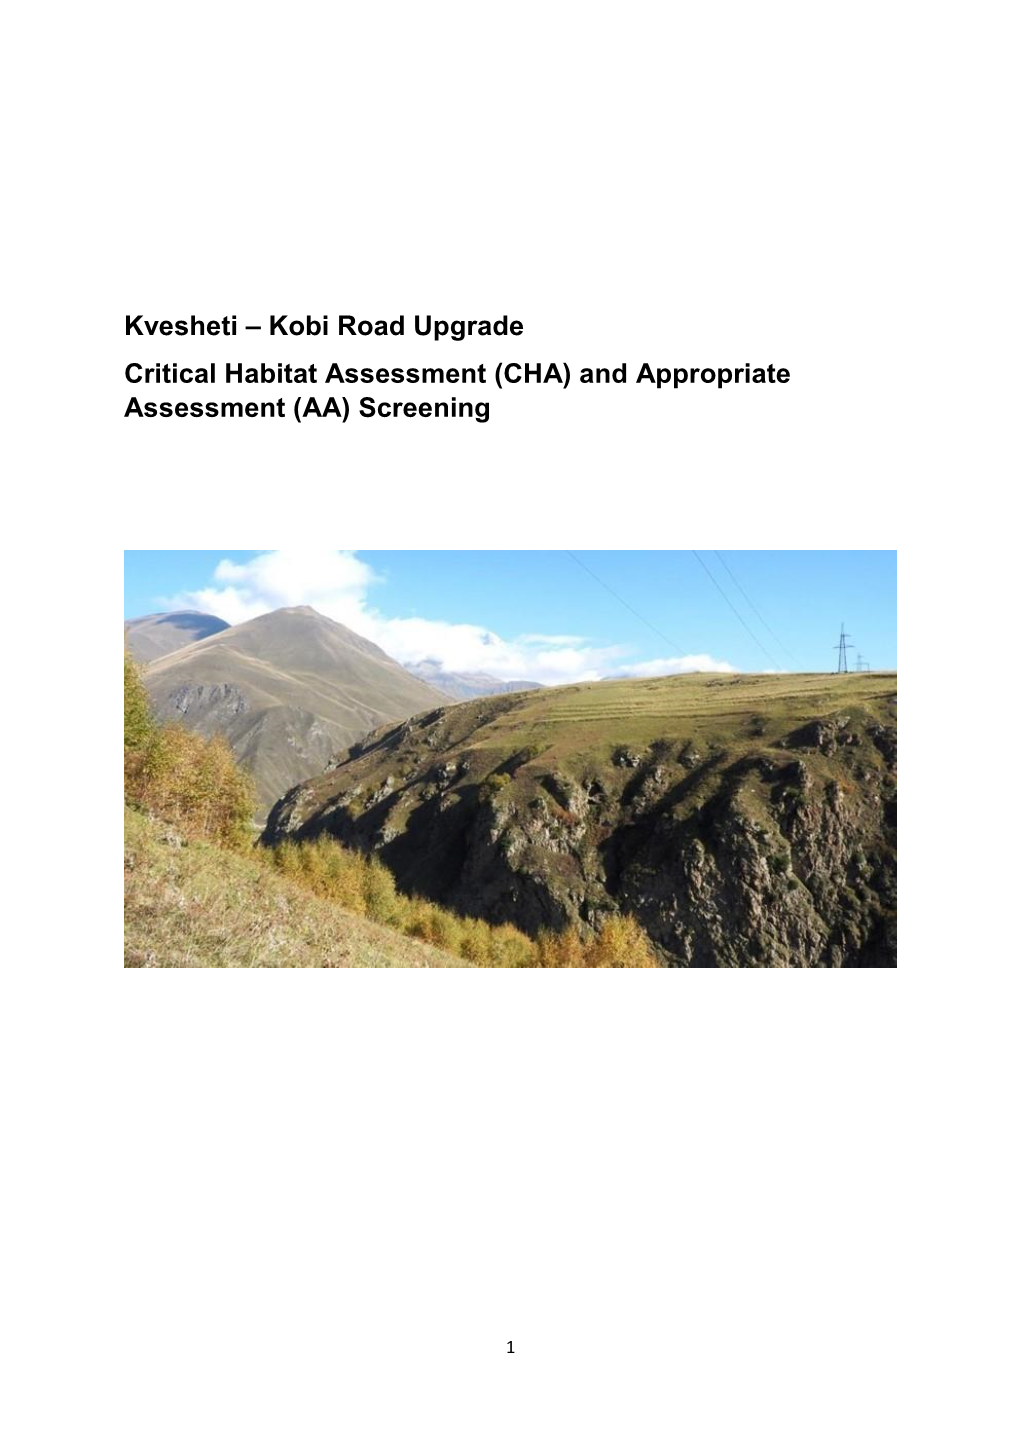 Kvesheti – Kobi Road Upgrade Critical Habitat Assessment (CHA) and Appropriate Assessment (AA) Screening